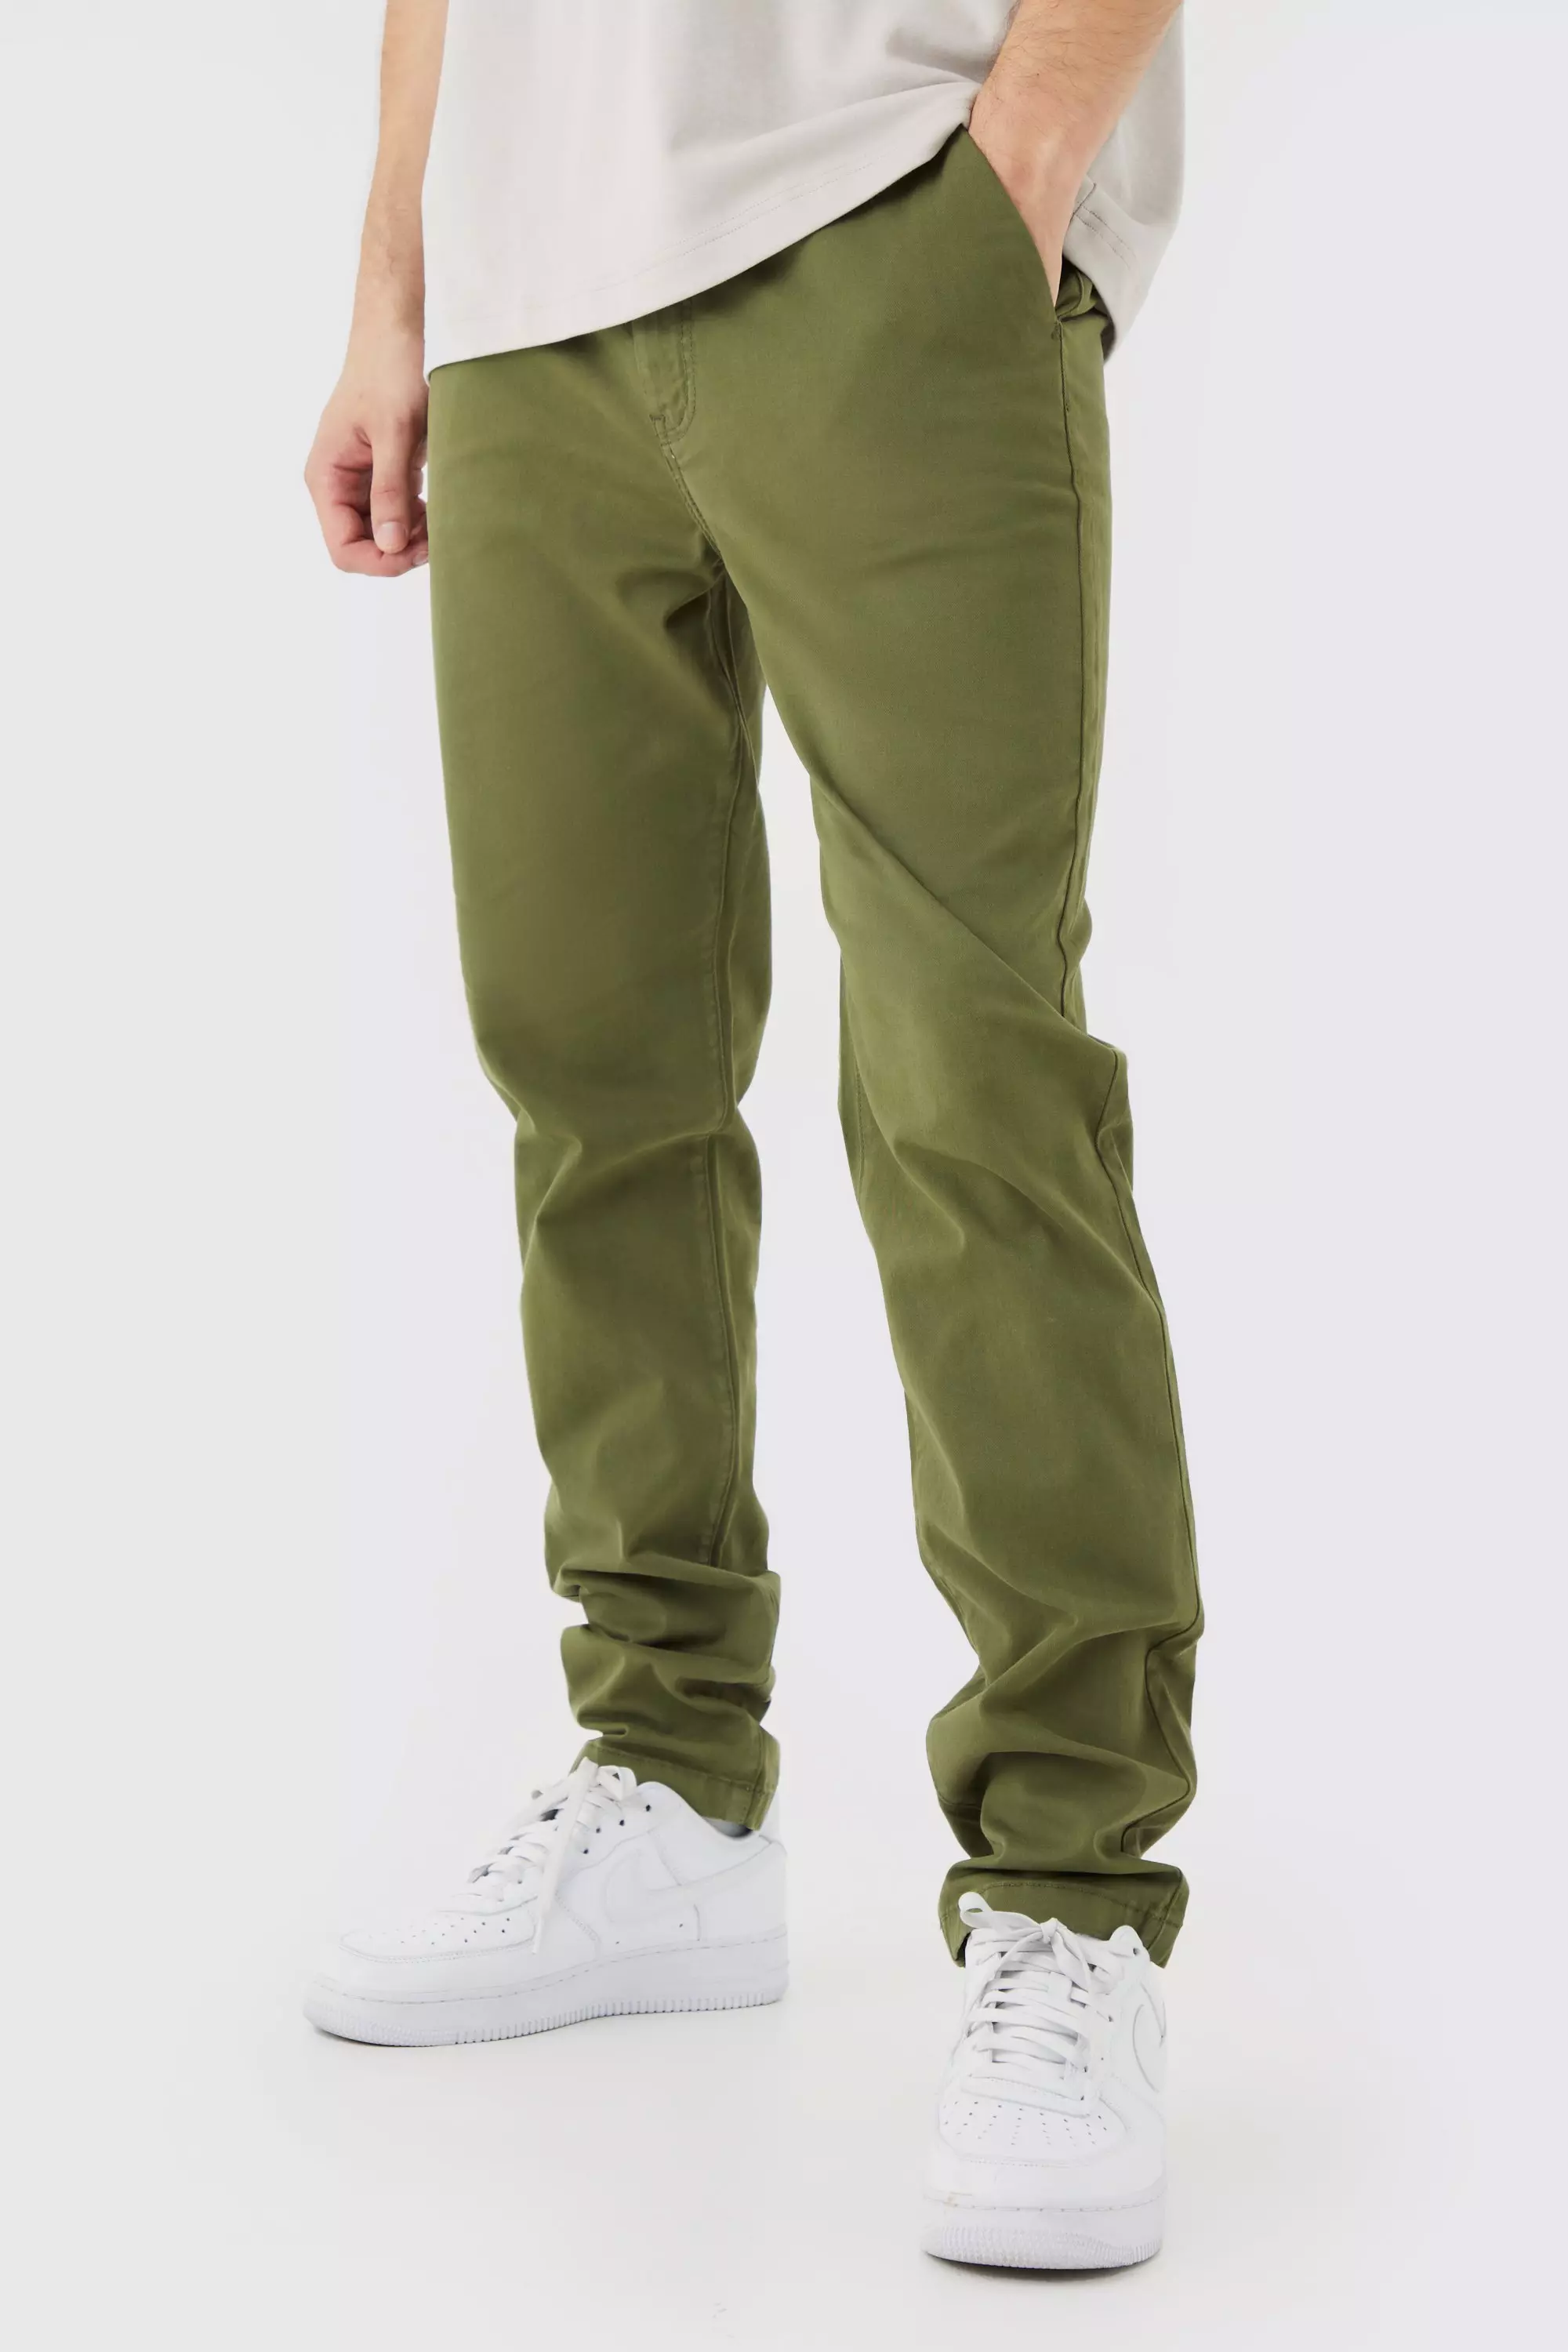 Khaki Tall Slim Chino Pants With Woven Tab